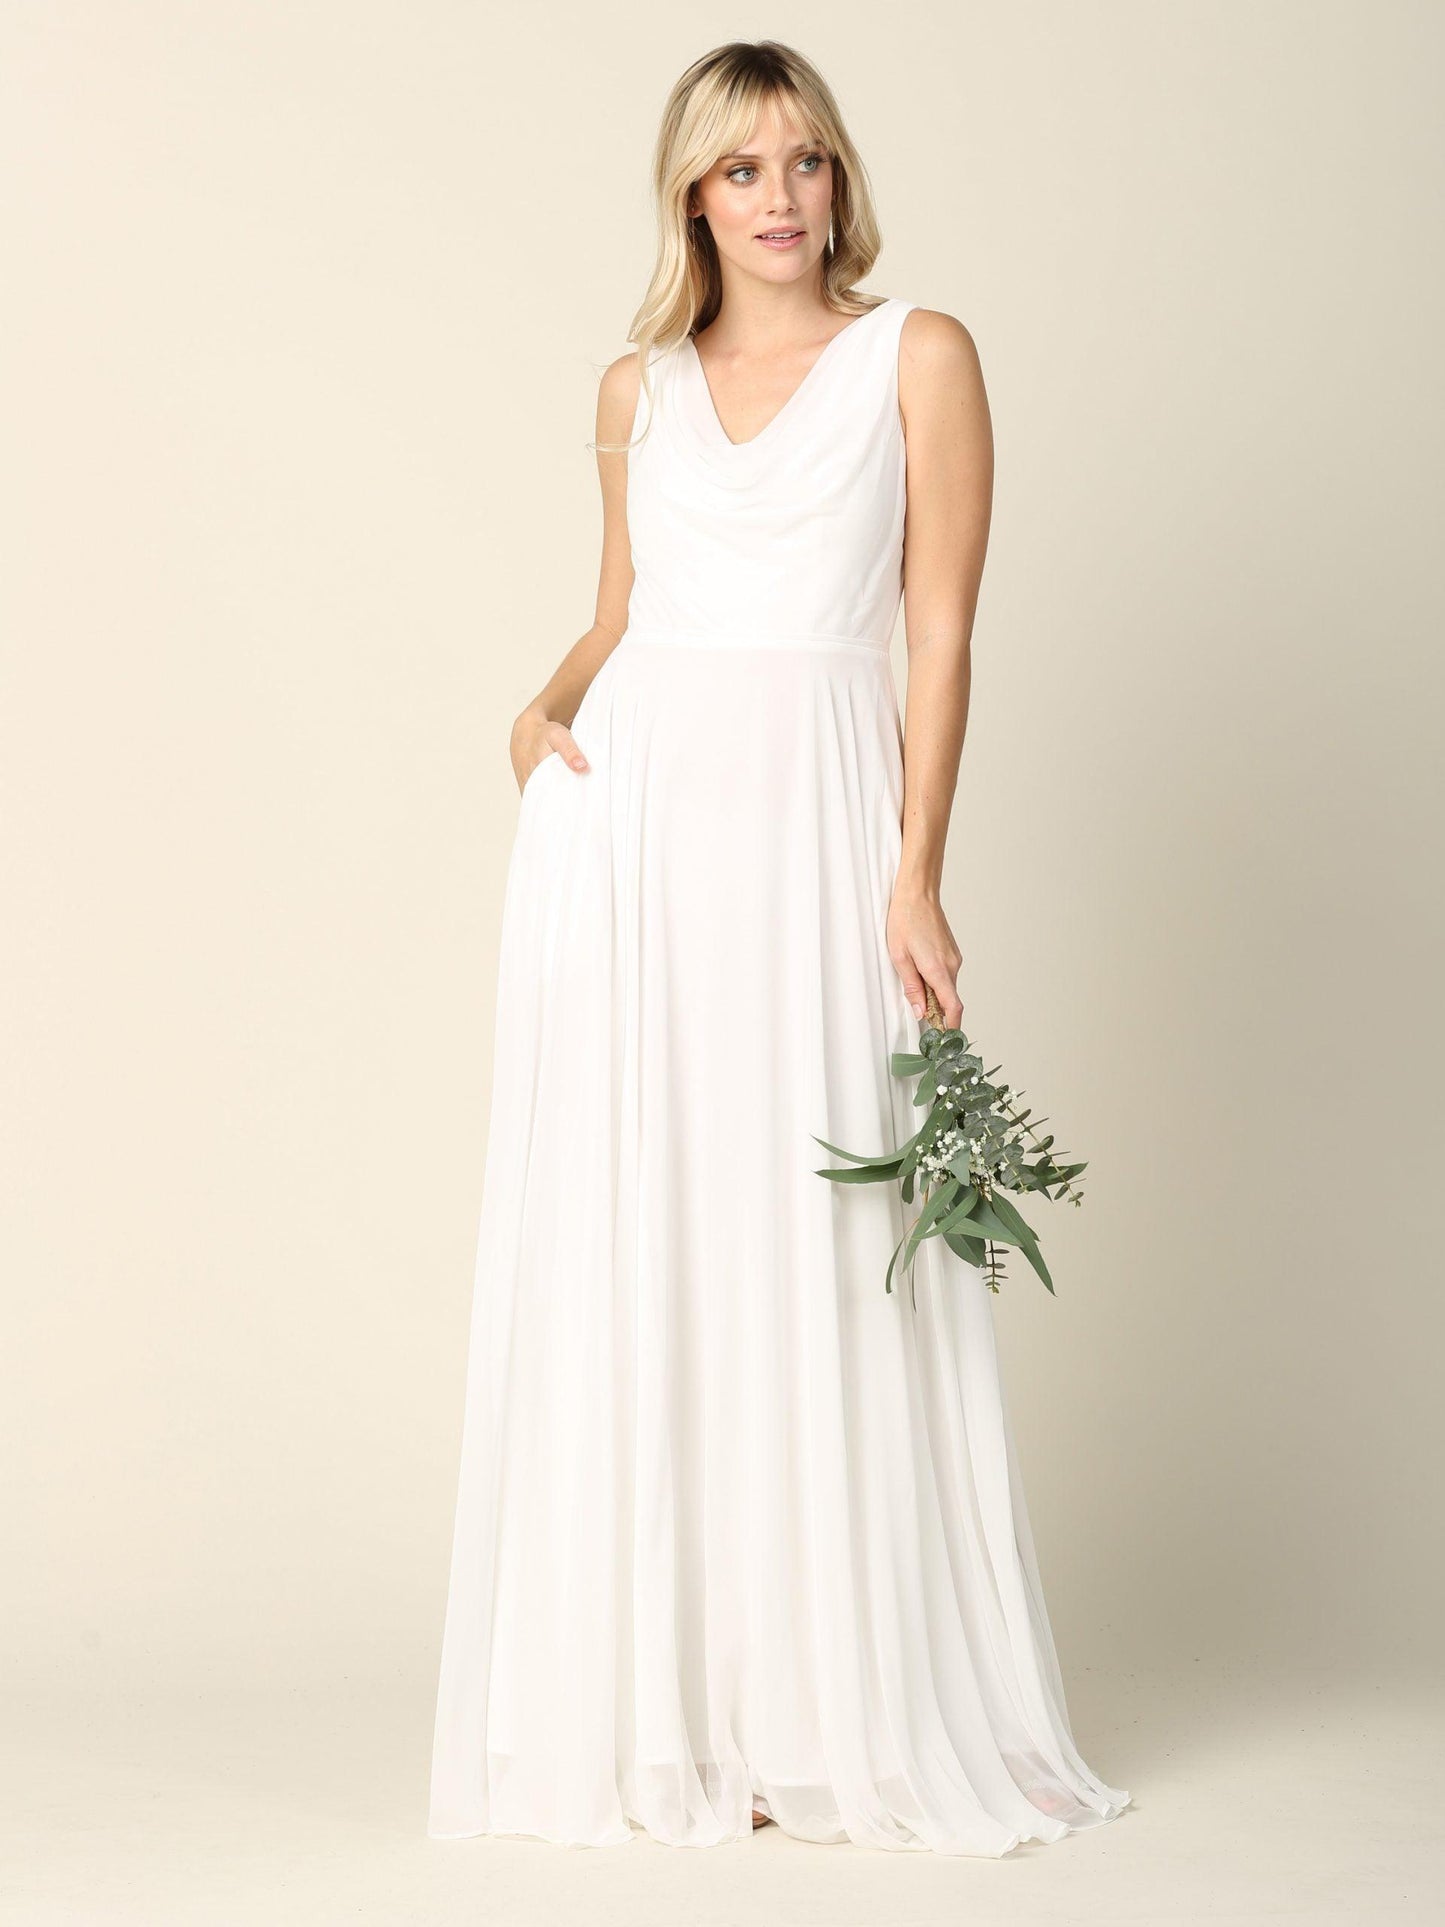 Long Sleeveless Chiffon Simple Wedding Dress - The Dress Outlet